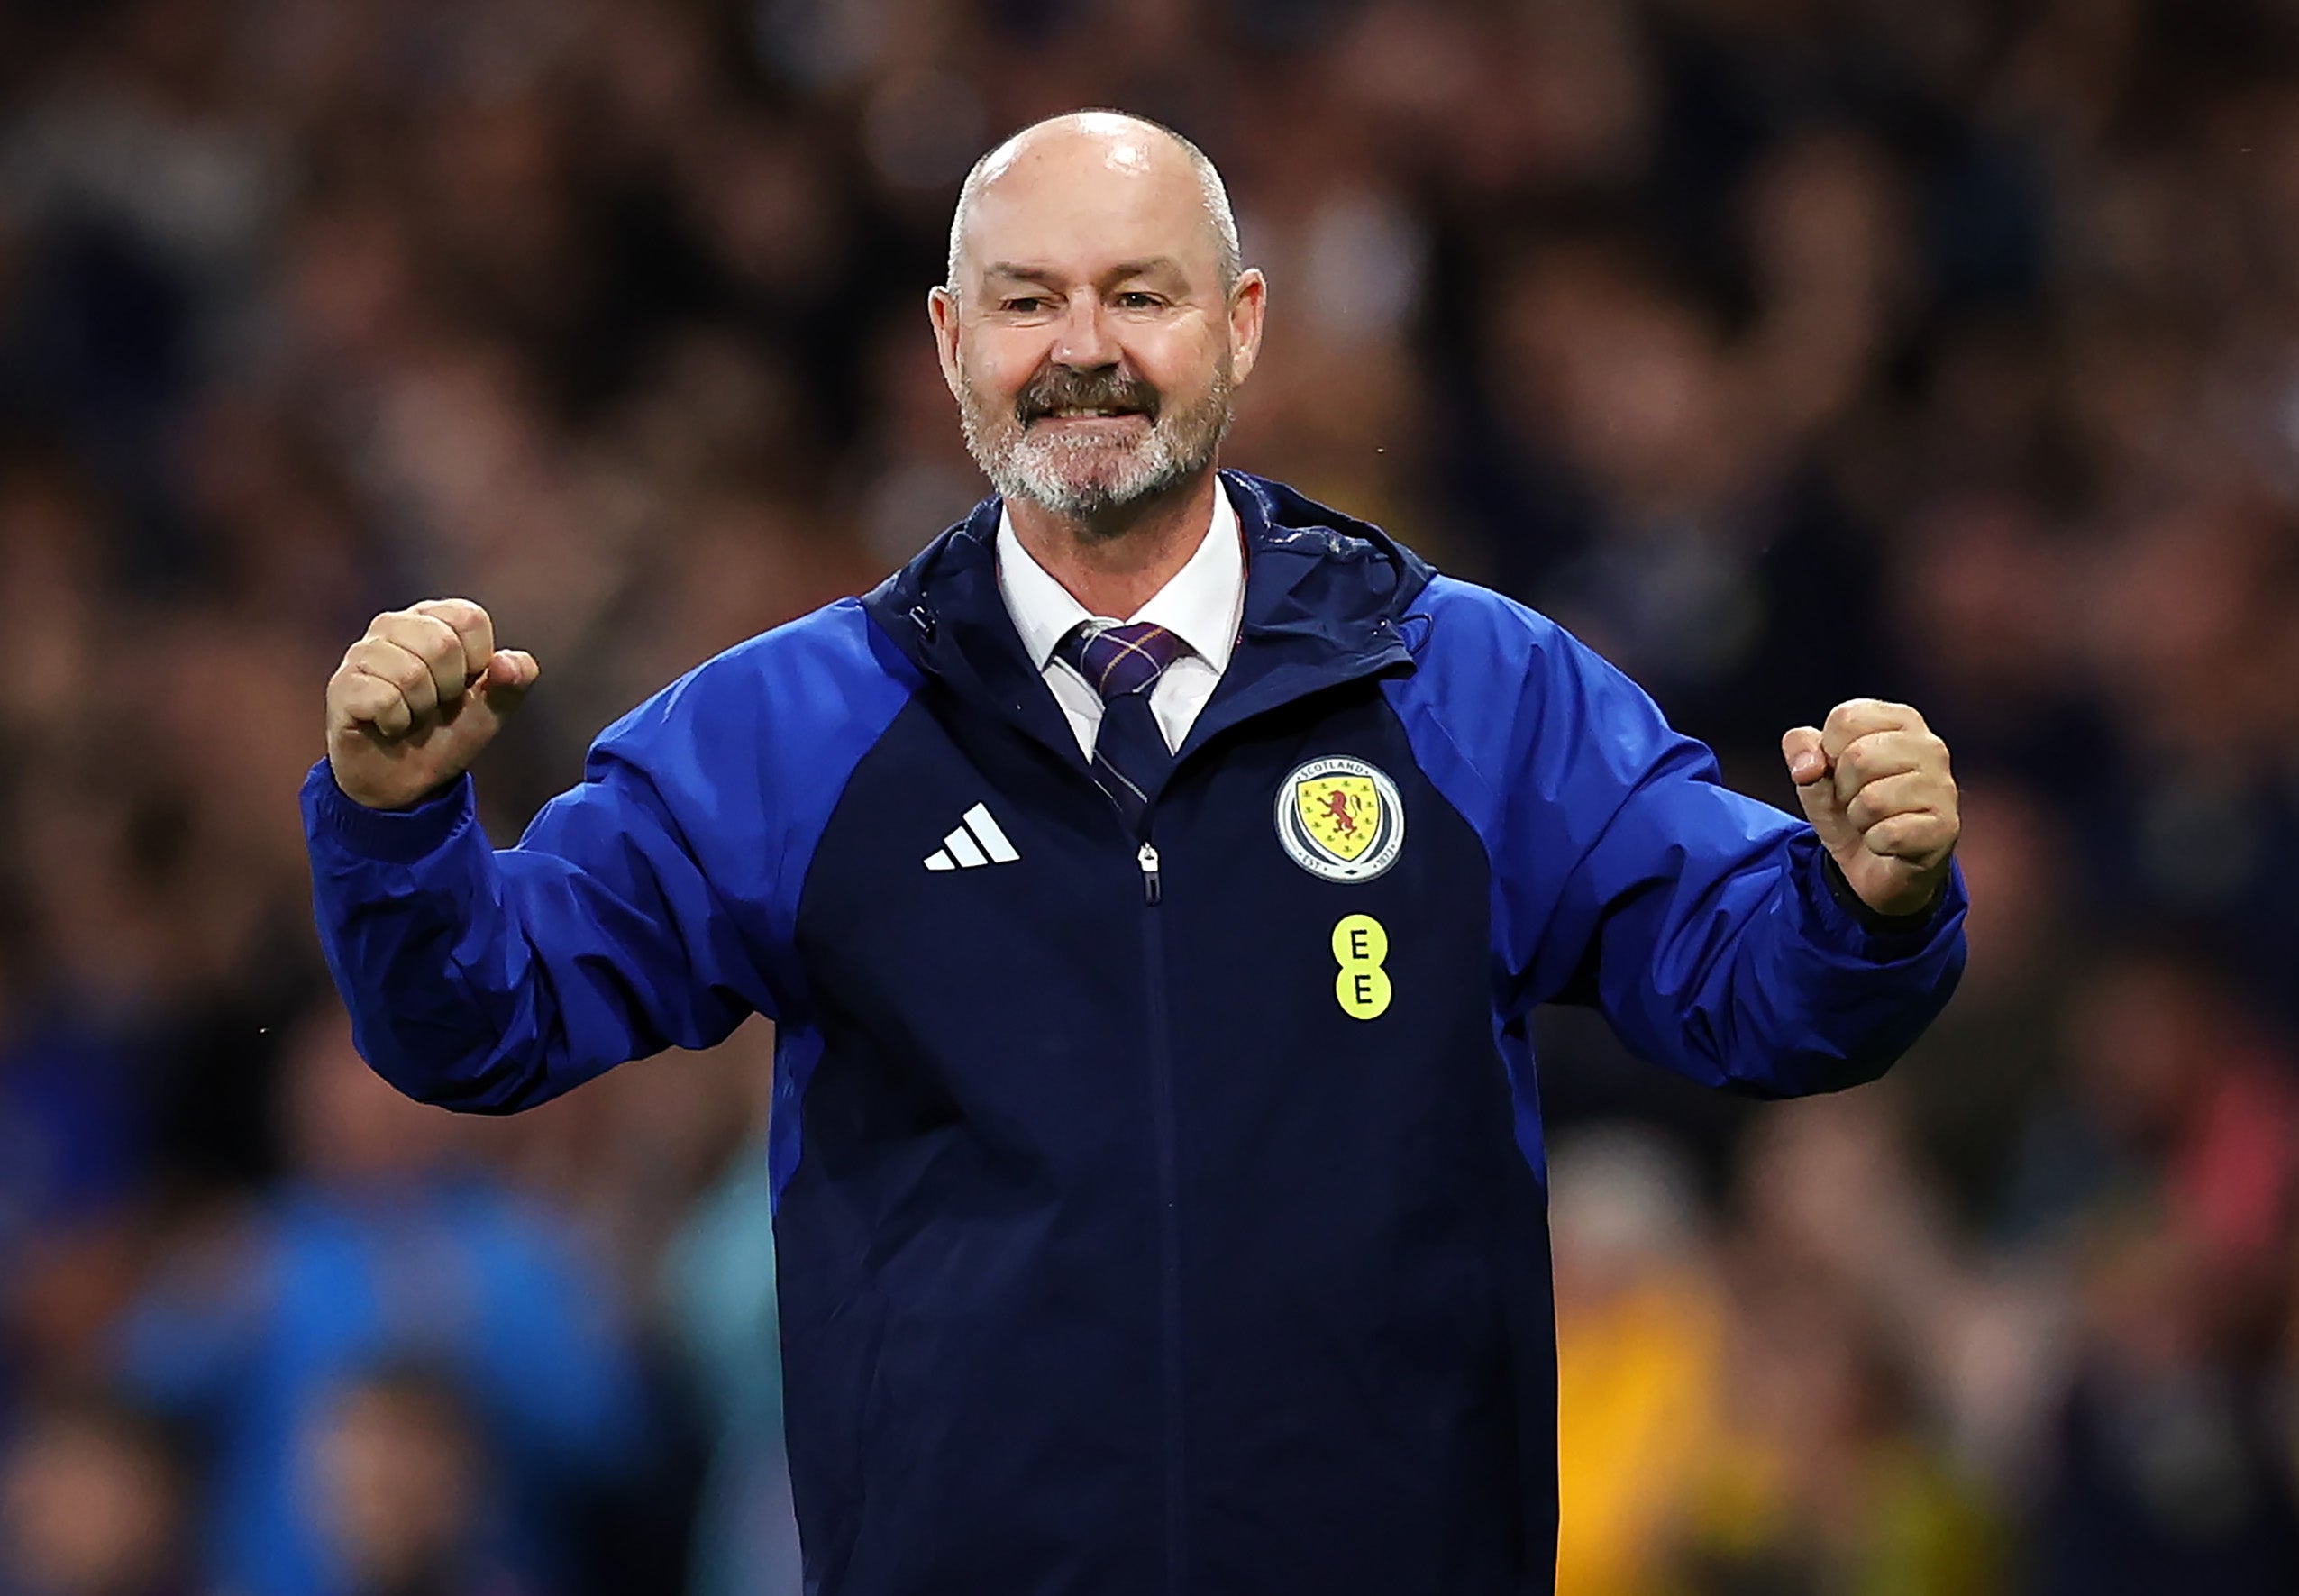 Steve Clarke has led Scotland to a second major tournament